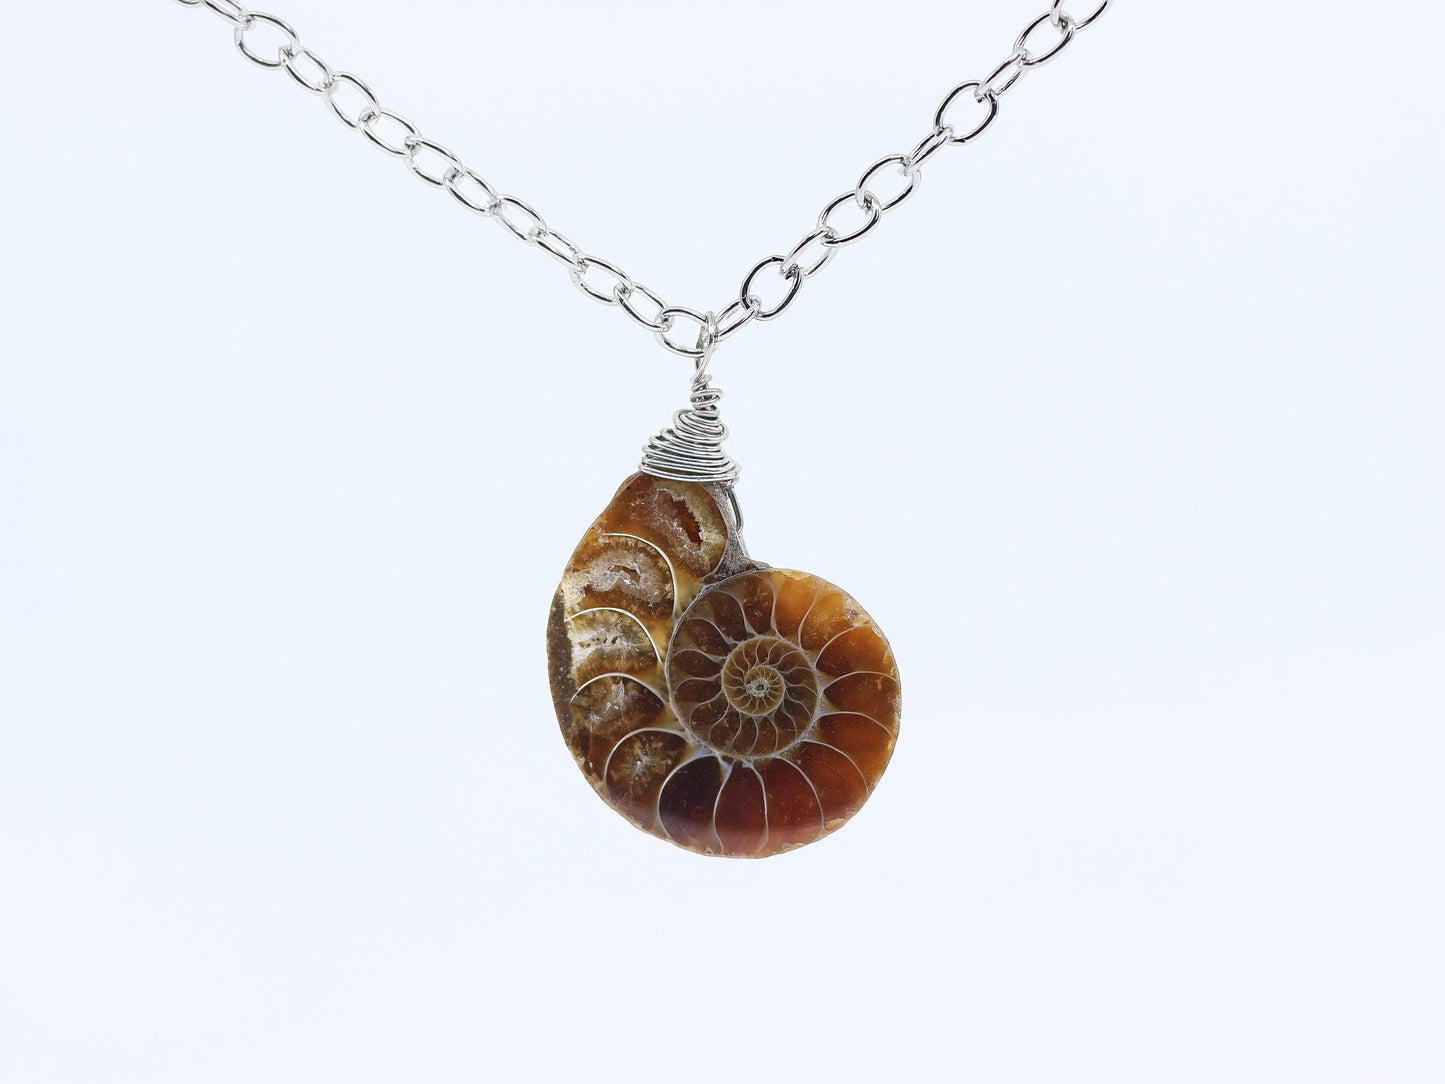 Ammonite Fossil Necklace | Ammonite Pendant | Fossil Jewelry | Wire Wrap Ammonite Necklace | Spiral Fossil Pendant | Fossil Specimen